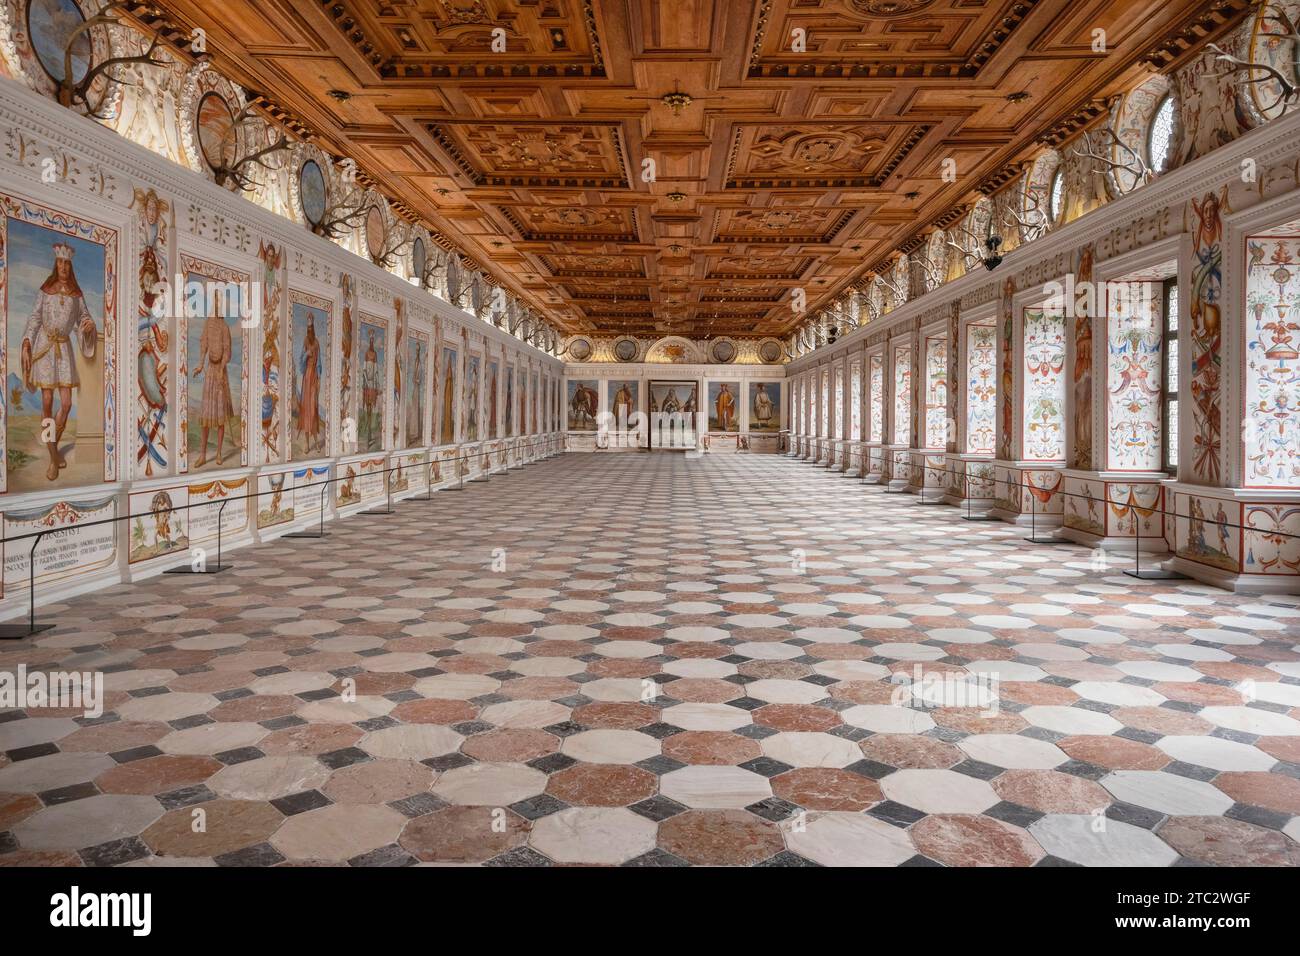 Österreich, Innsbruck, Schloss Ambras, ein Renaissanceschloss aus dem 16. Jahrhundert, der Spanische Saal ist mit 27 abendfüllenden Porträts der Herrscher von Tirol geschmückt. Stockfoto